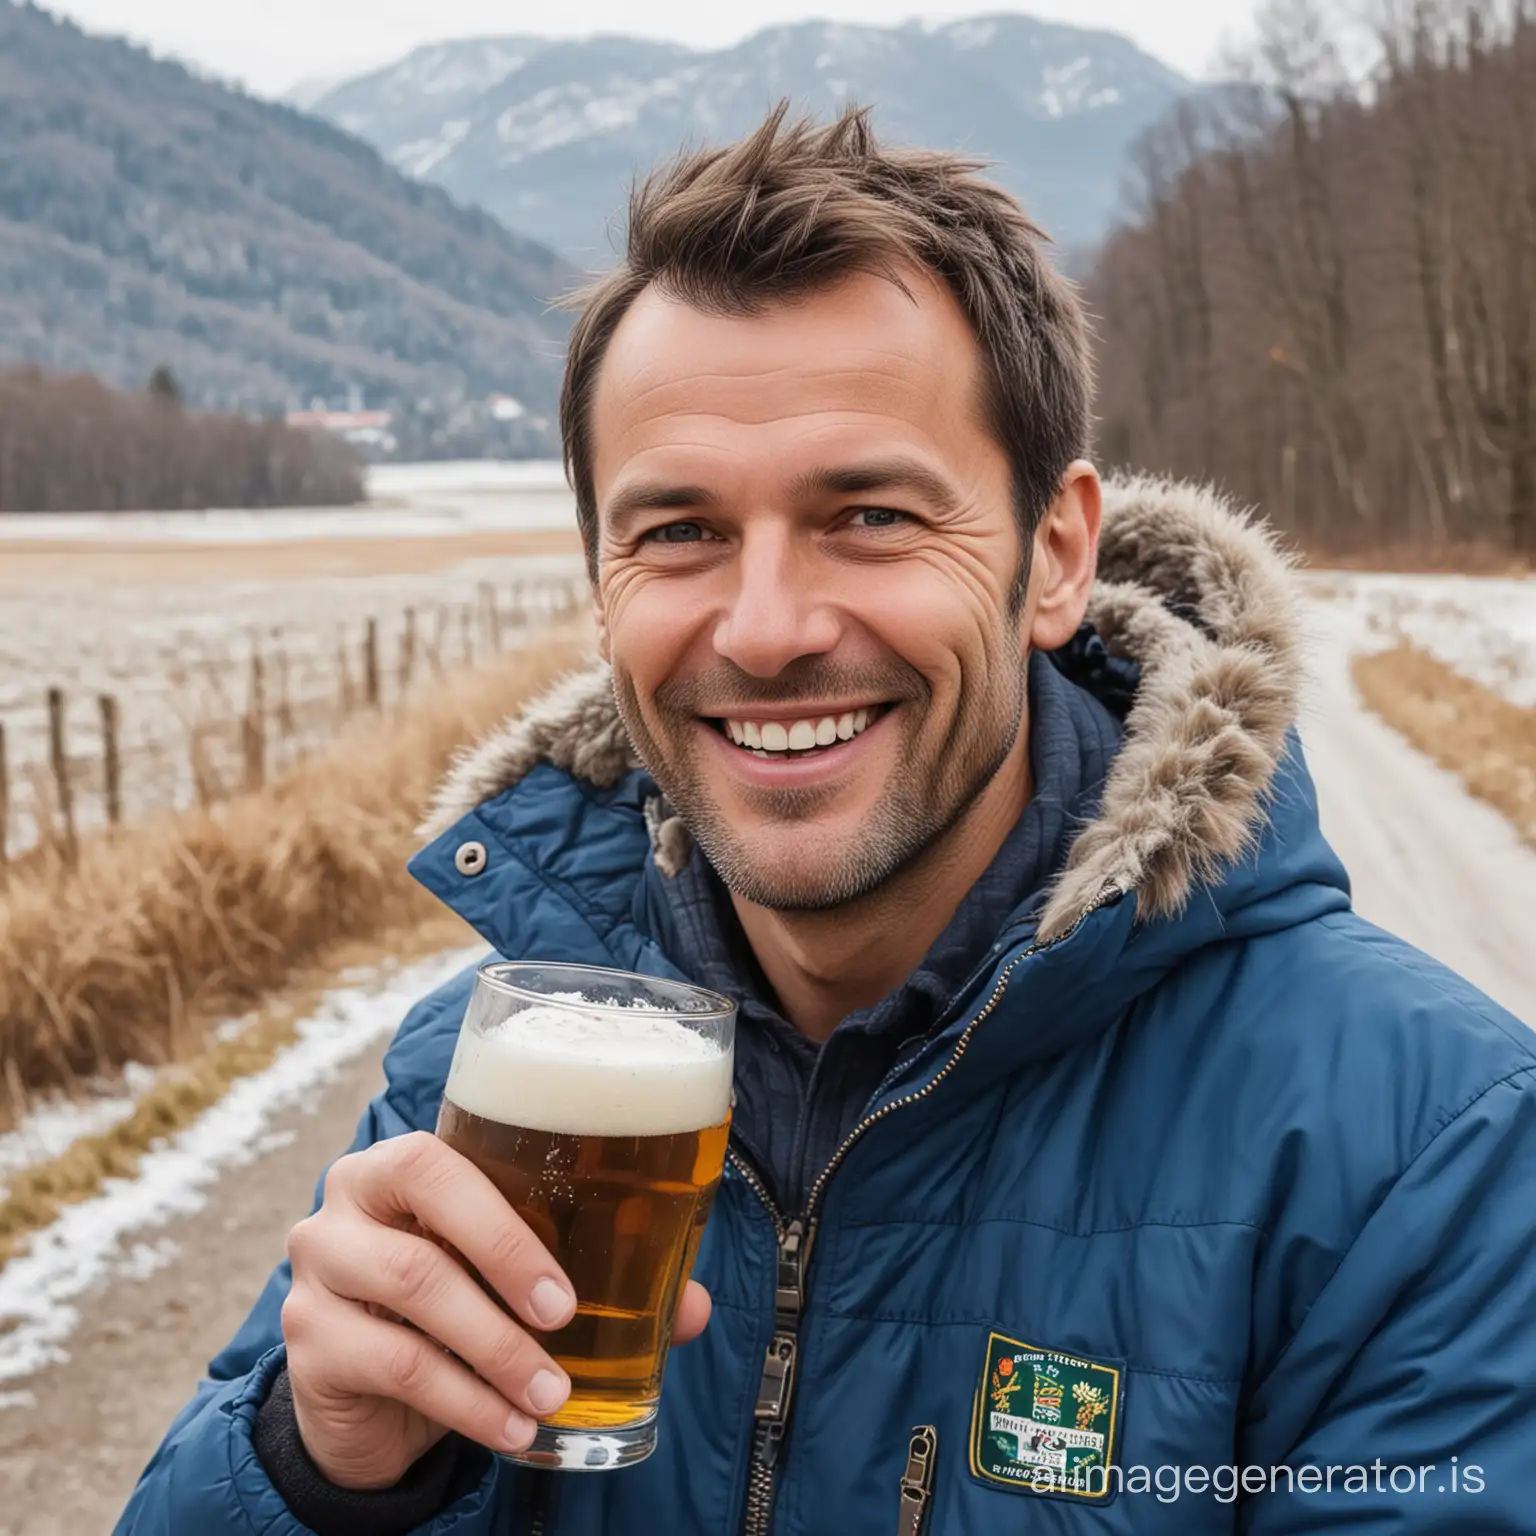 Man drinking beer in blue winter jacket, German landscape, 50 years old smiling